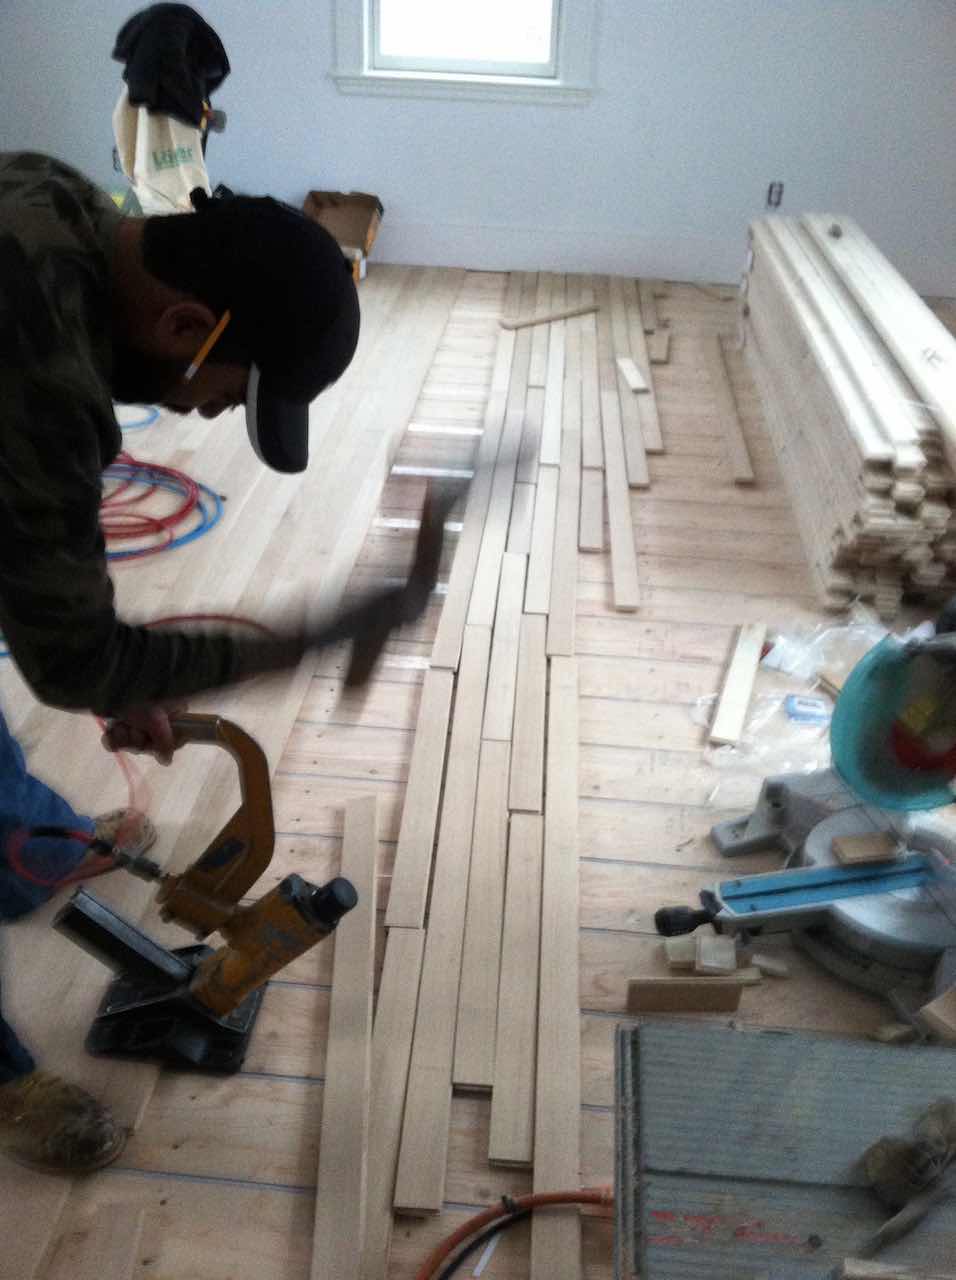 Radiant Floor Heat Gandswoodfloors, Installing Hardwood Over Radiant Heat Floors